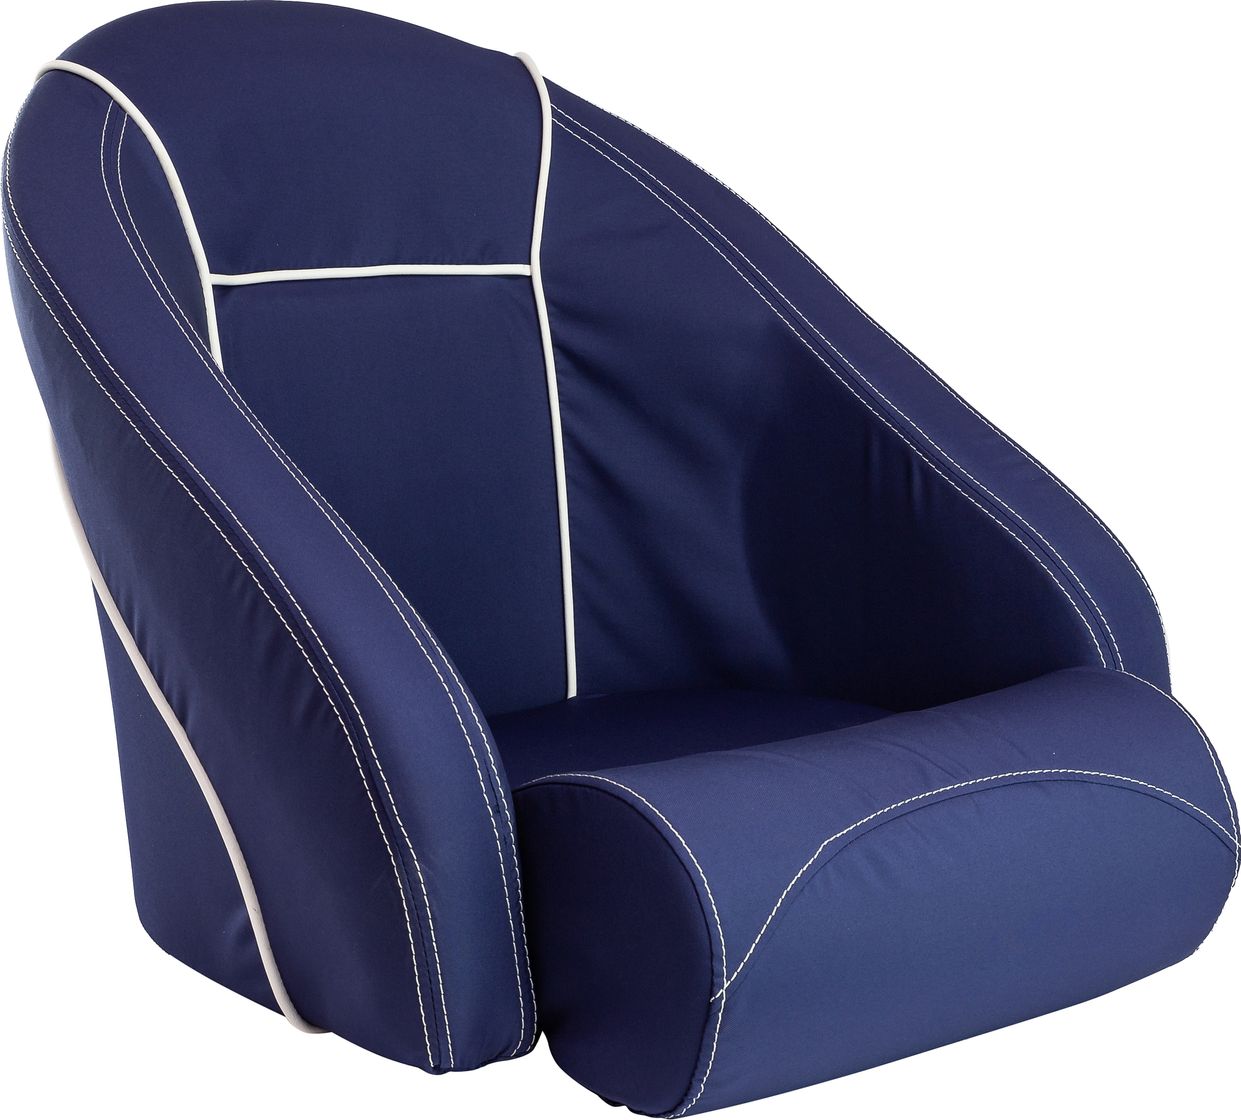 Кресло ROMEO мягкое, подставка, обивка ткань Markilux темно-синяя 118100395 кресло складное мягкое traveler обивка камуфляжная ткань 1061107c